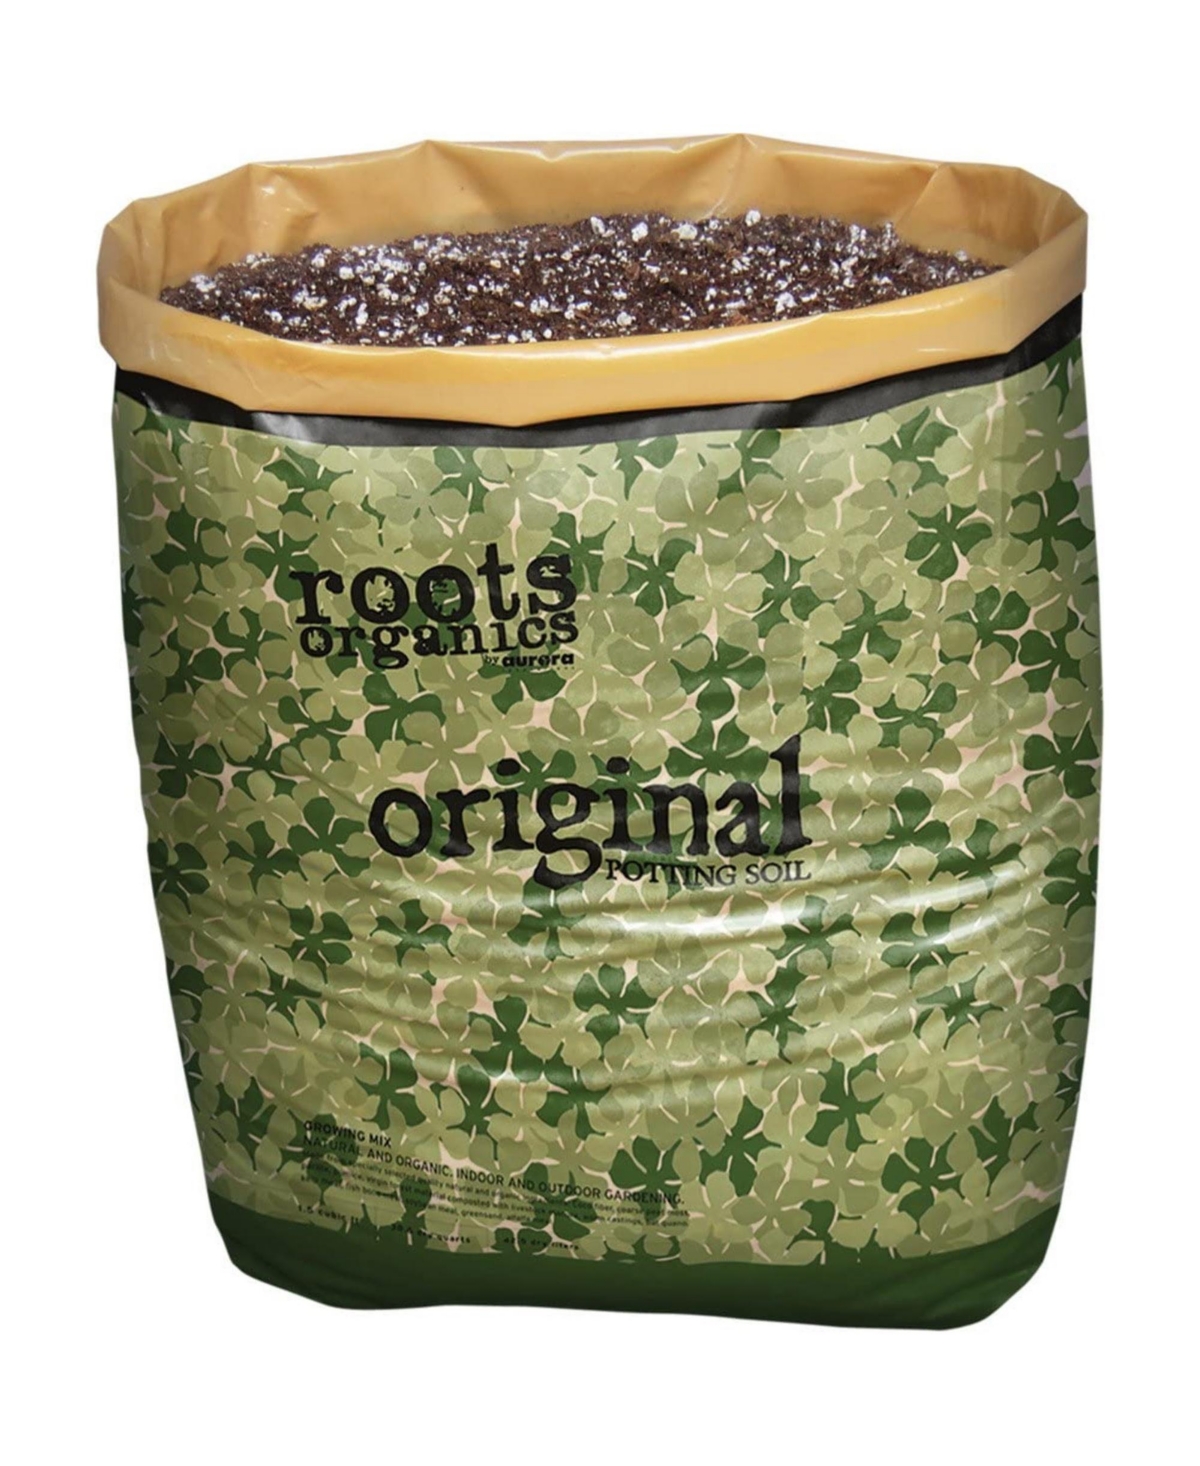 Original Potting Soil, Organic Growing Media with Mycorrhizae, Plant-in-Bag, .75 Cubic Foot - Multi